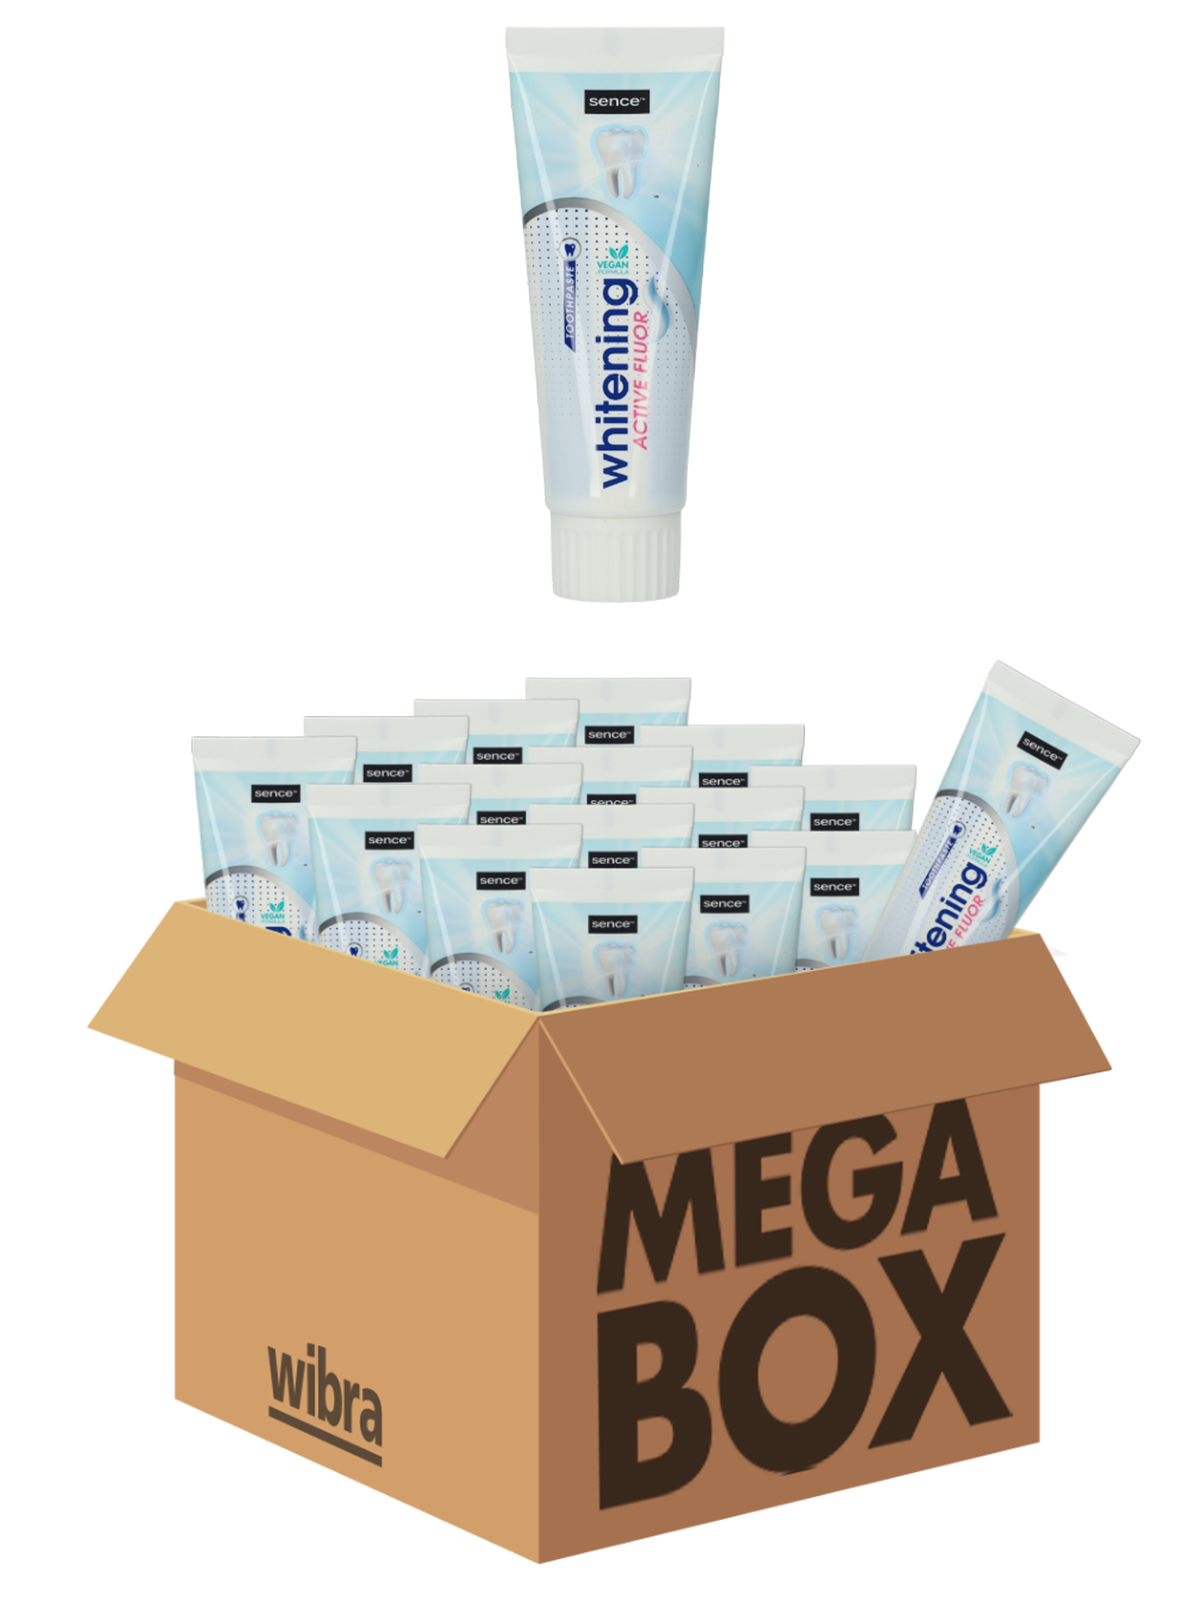 Sence Whitening tandpasta megabox 24 tubes - Wibra